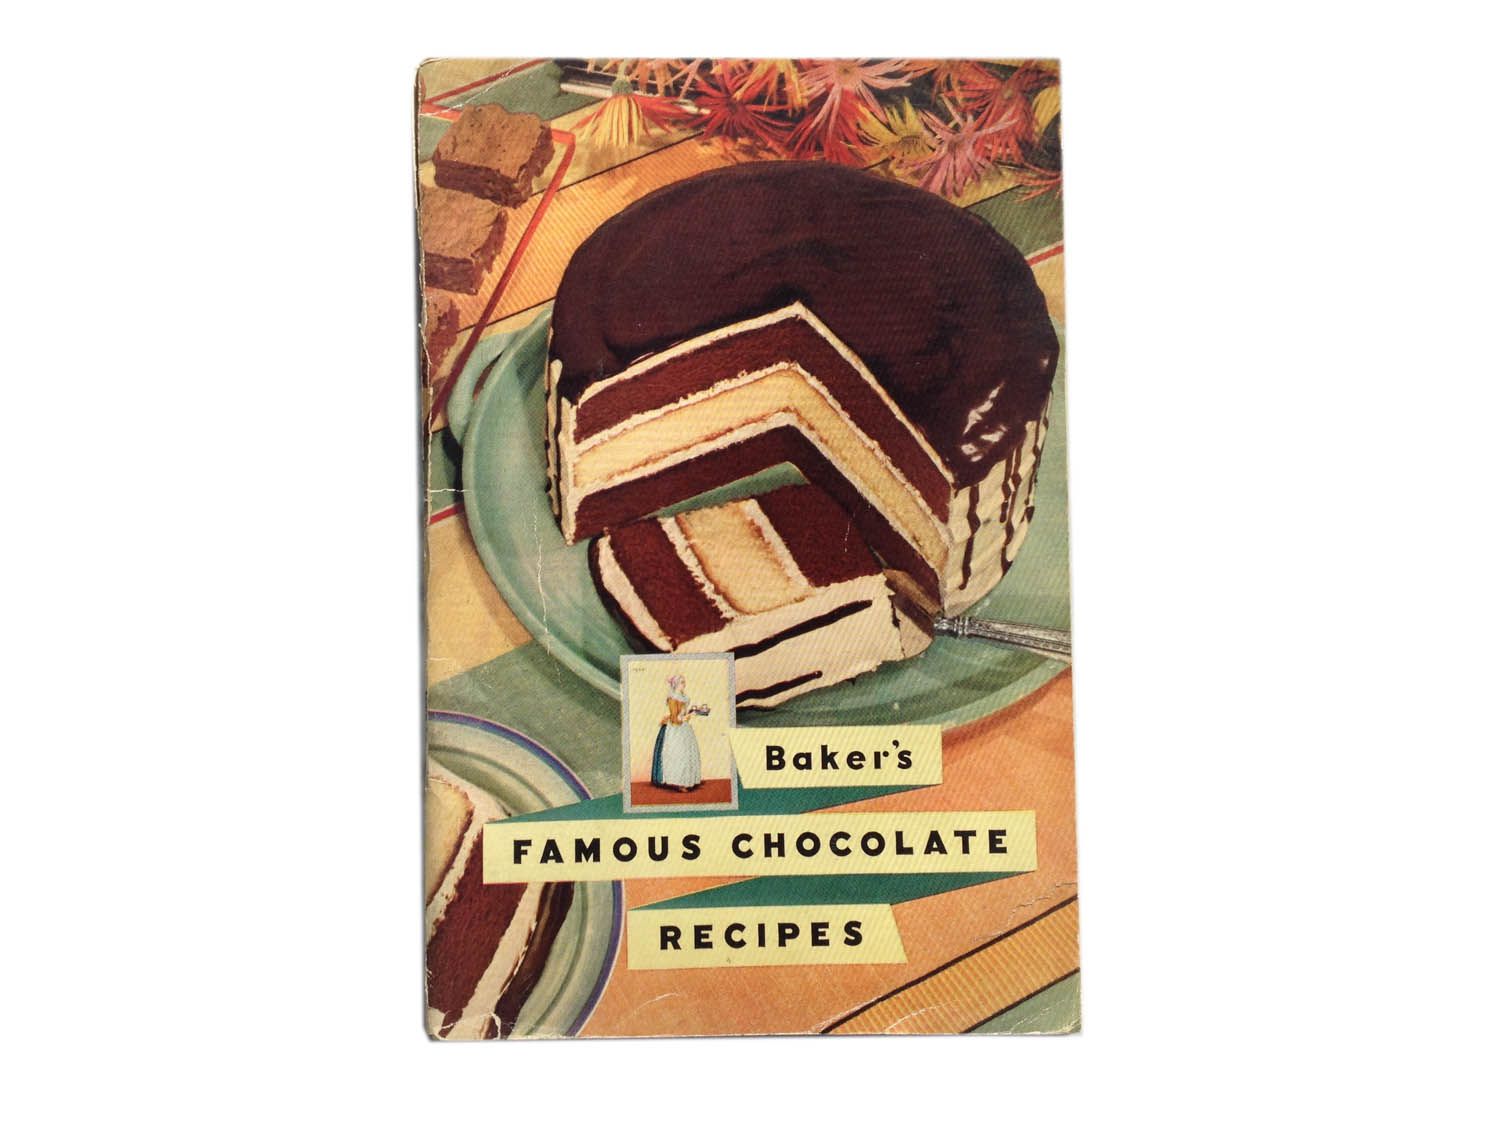 20150316-old-cookbooks-bakers-famous-chocolate-recipes-eva-geertz-5.jpg